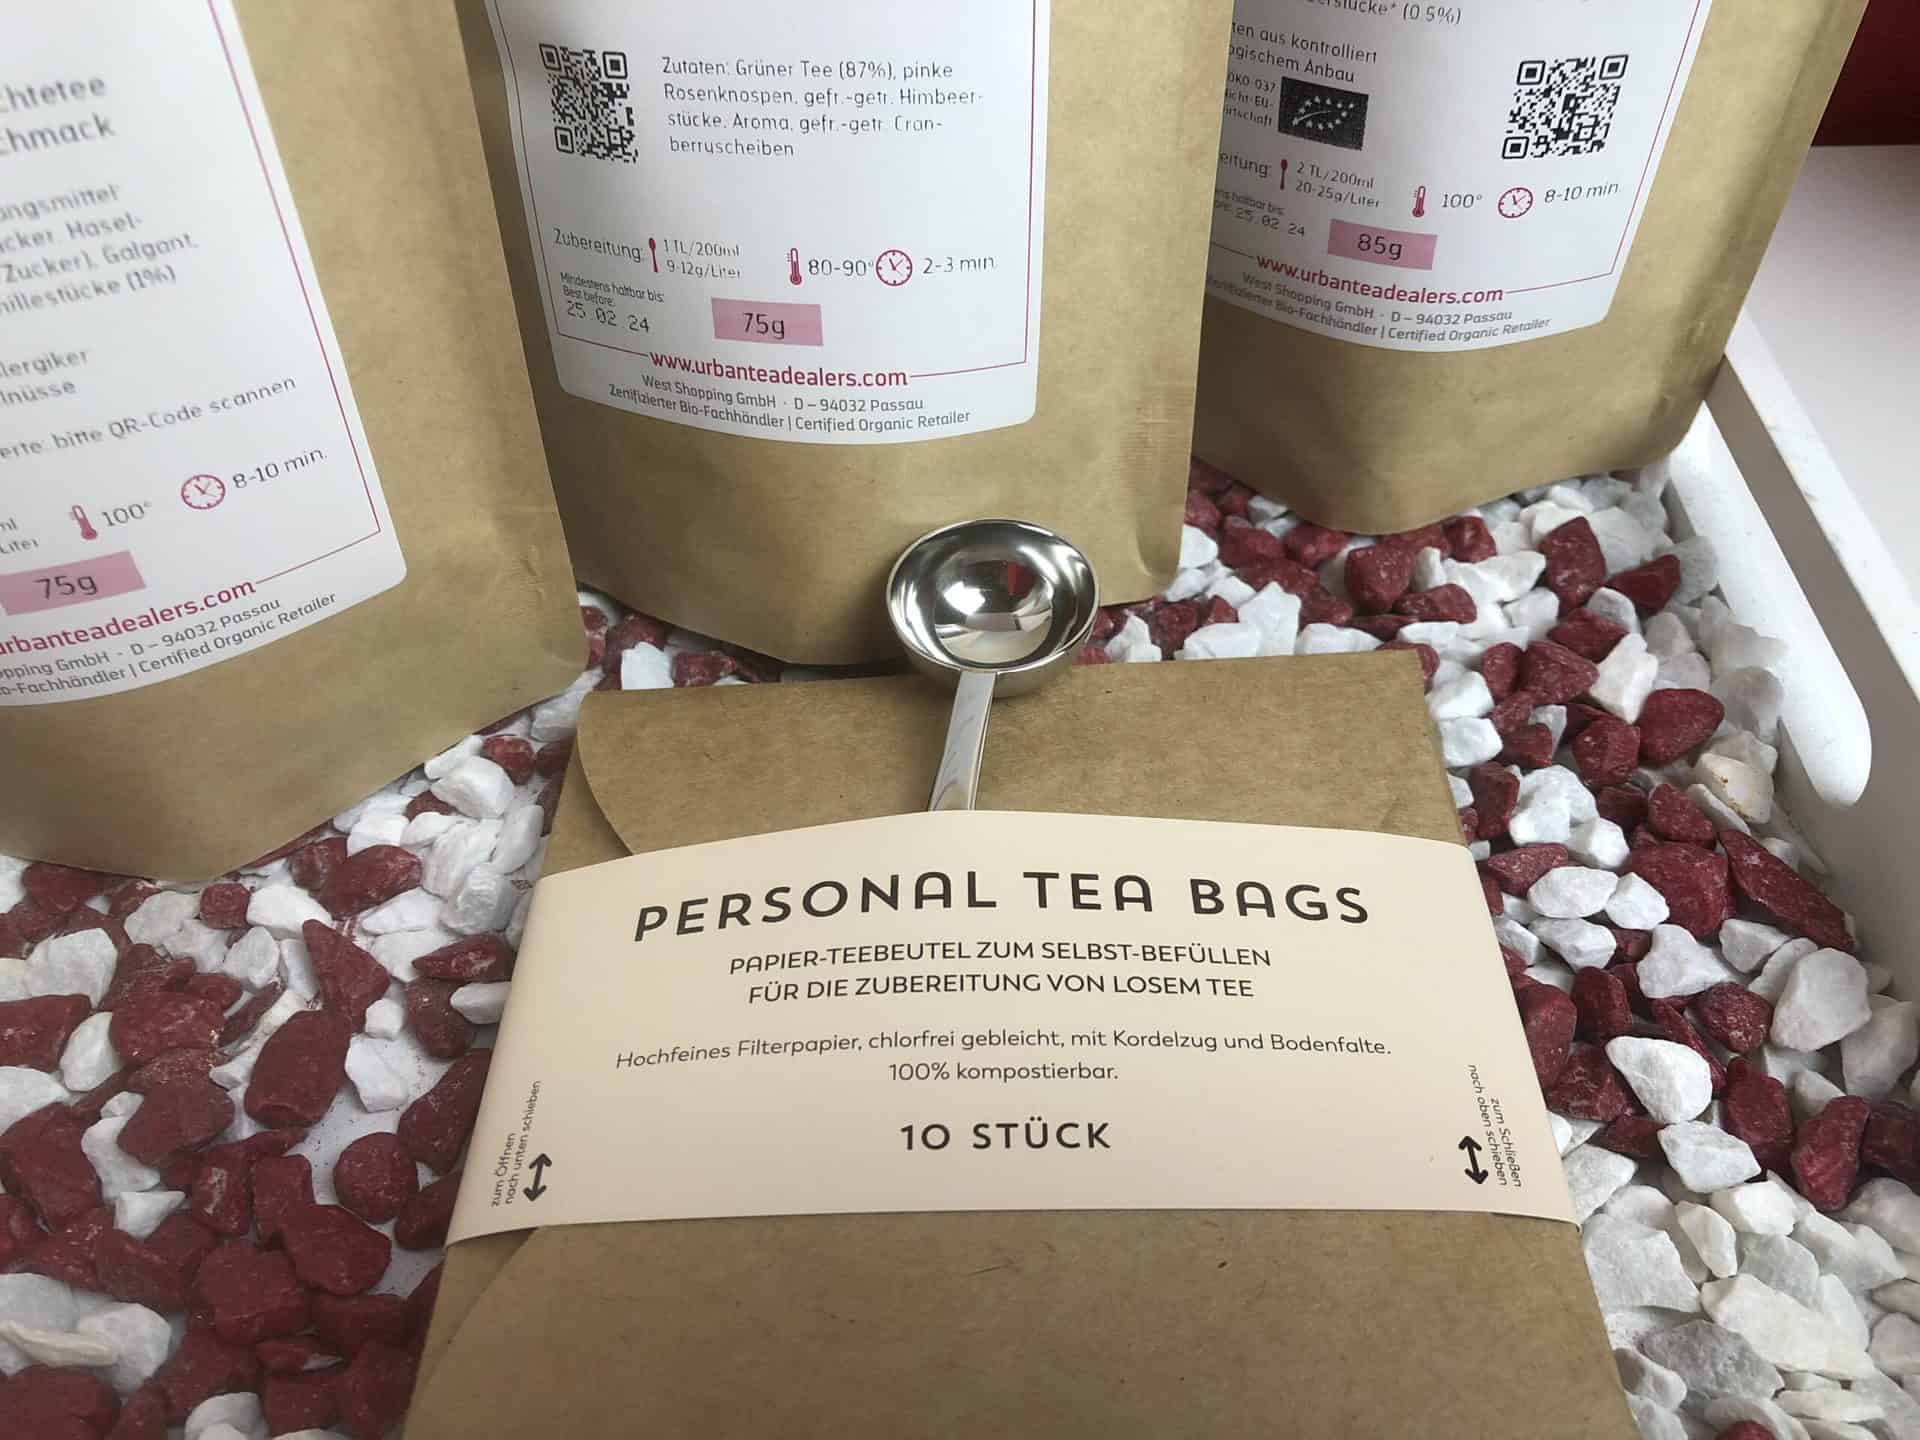 Der Teelöffel und die Personal Tea Bags